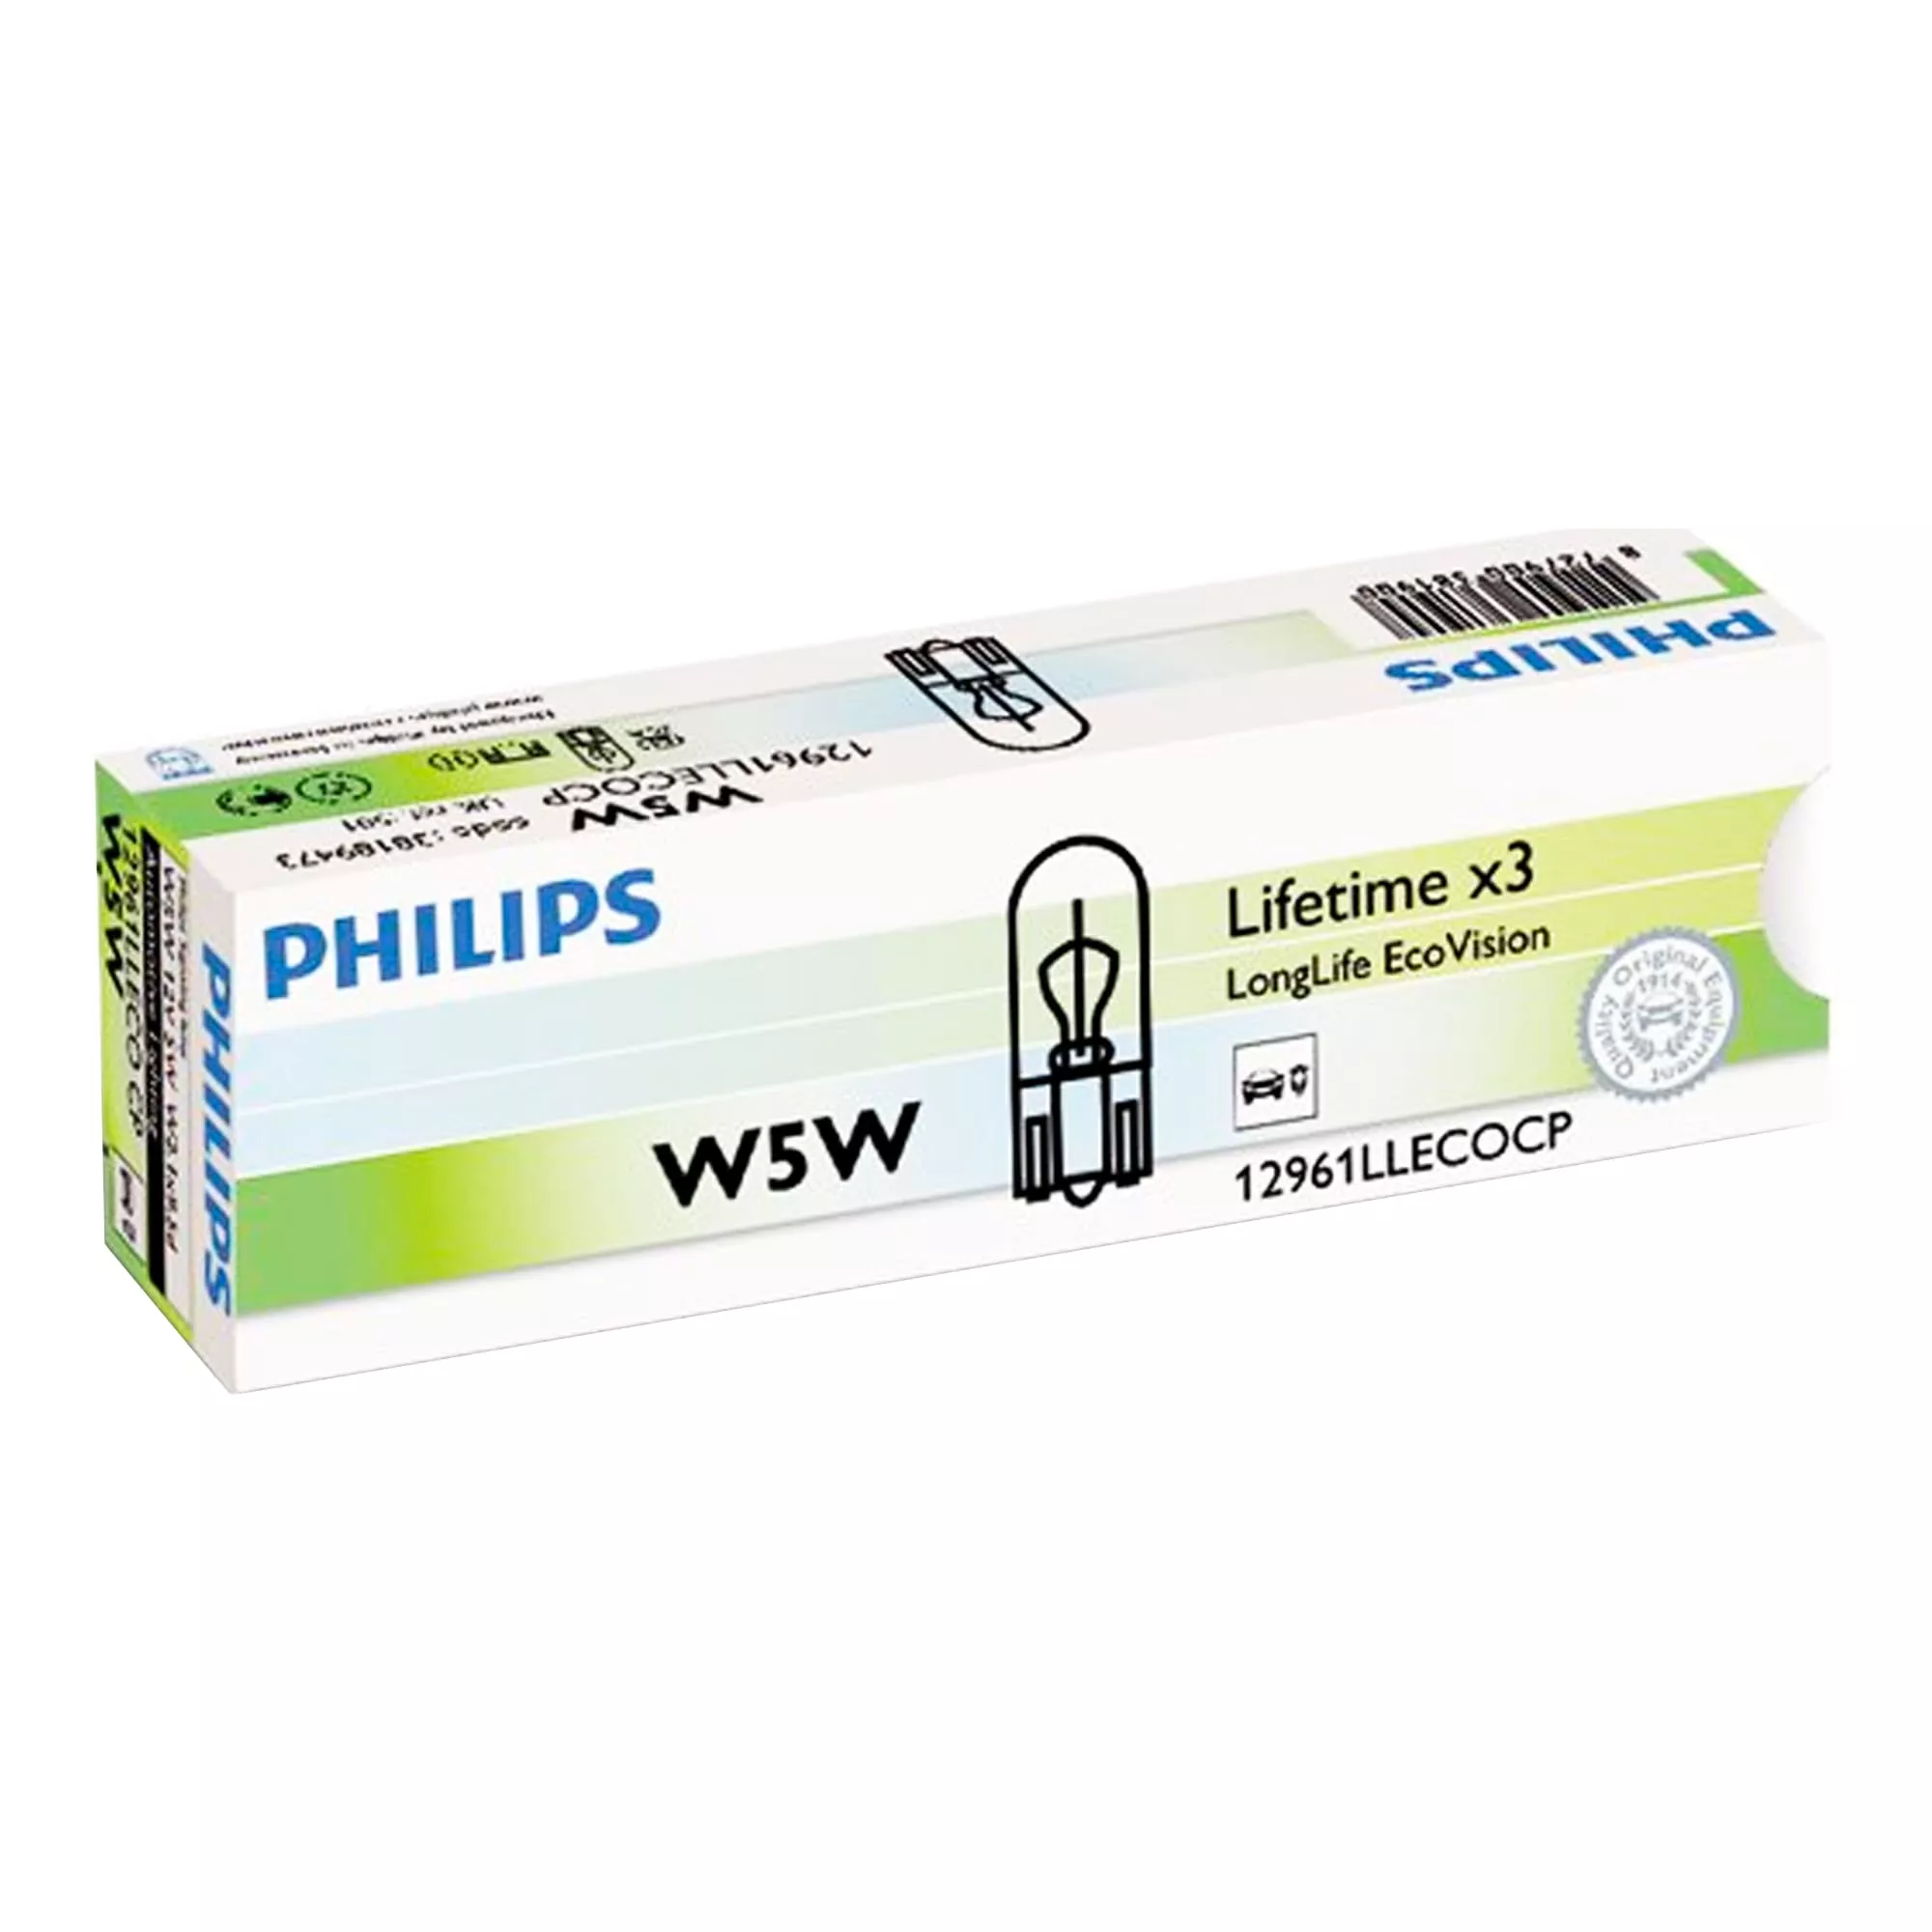 Лампа Philips LongLife EcoVision W5W 12V 5W 12961 LLECO CP